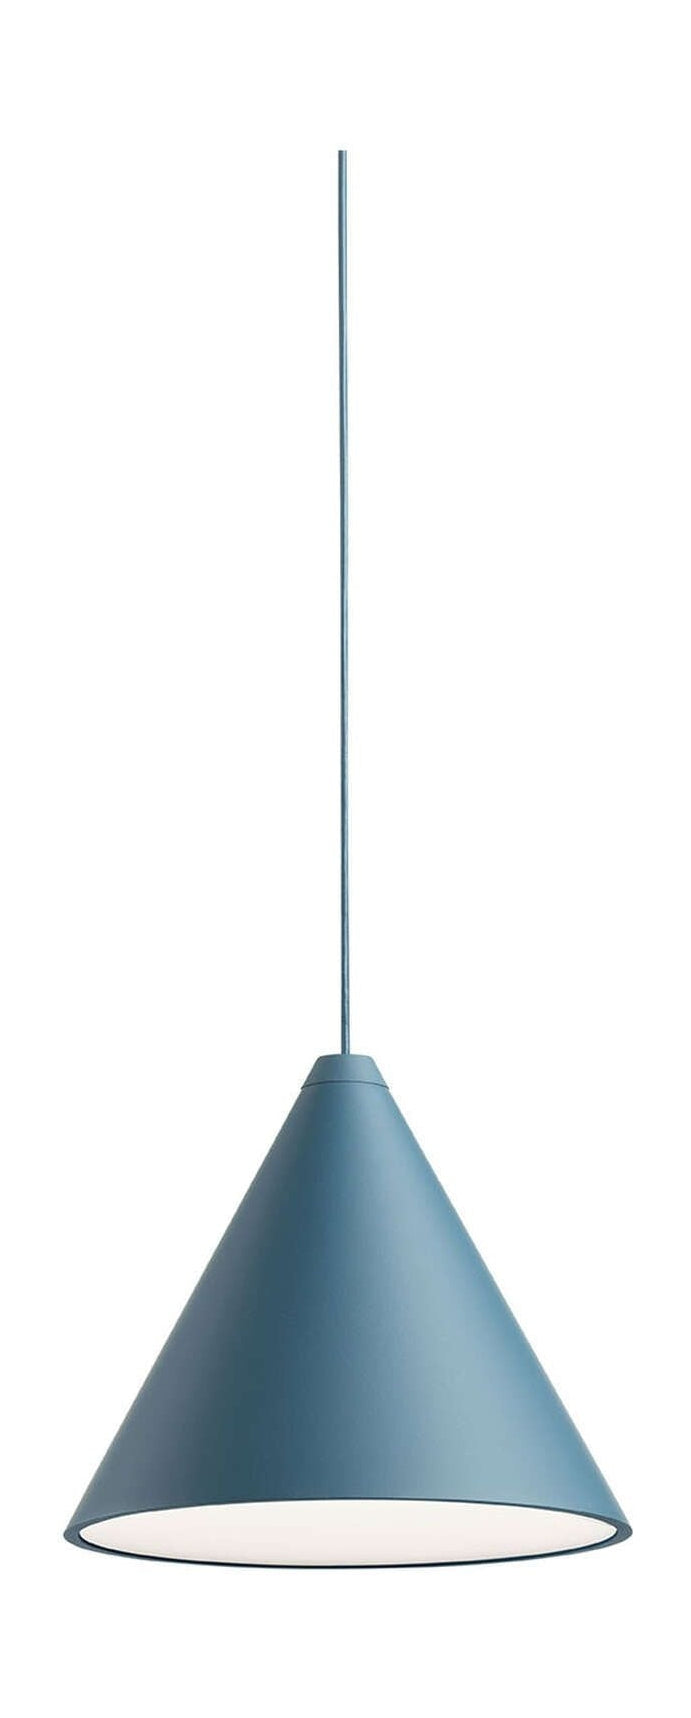 Flos String Light Cone Head Pendant lampe Bluetooth 22 m, bleu